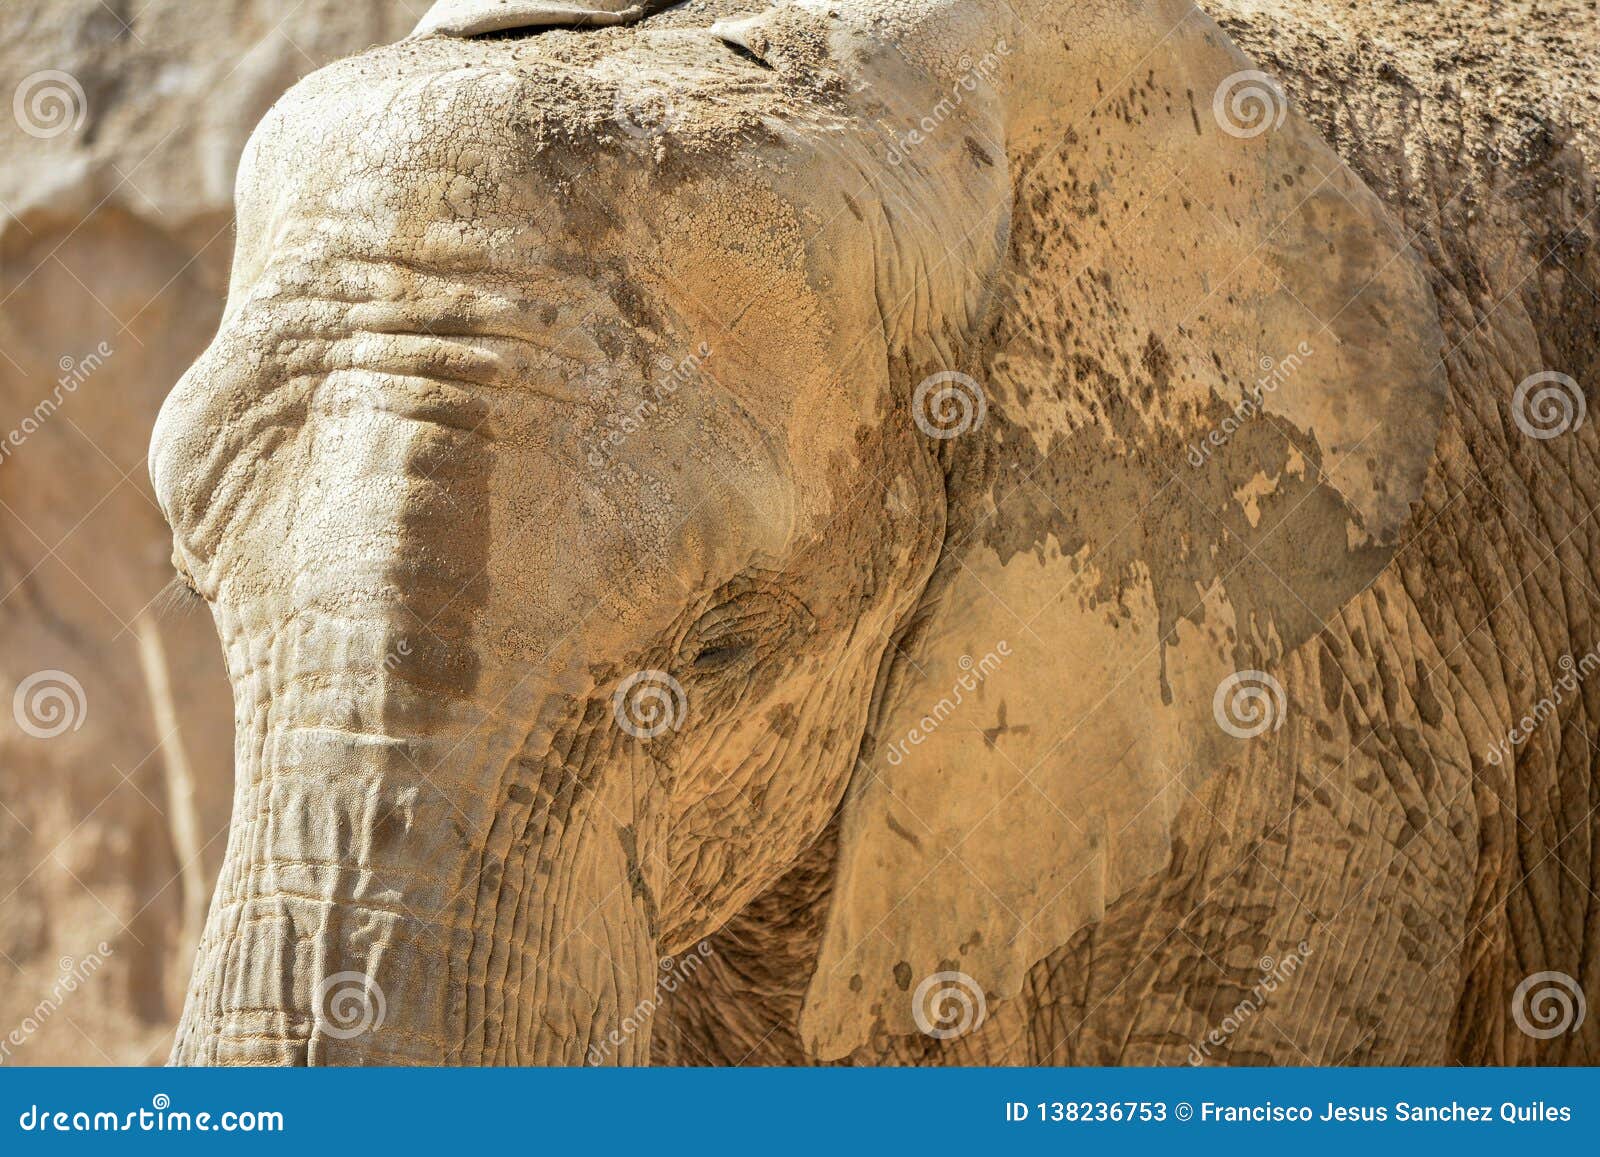 elefante africano de sabana loxodonta africana